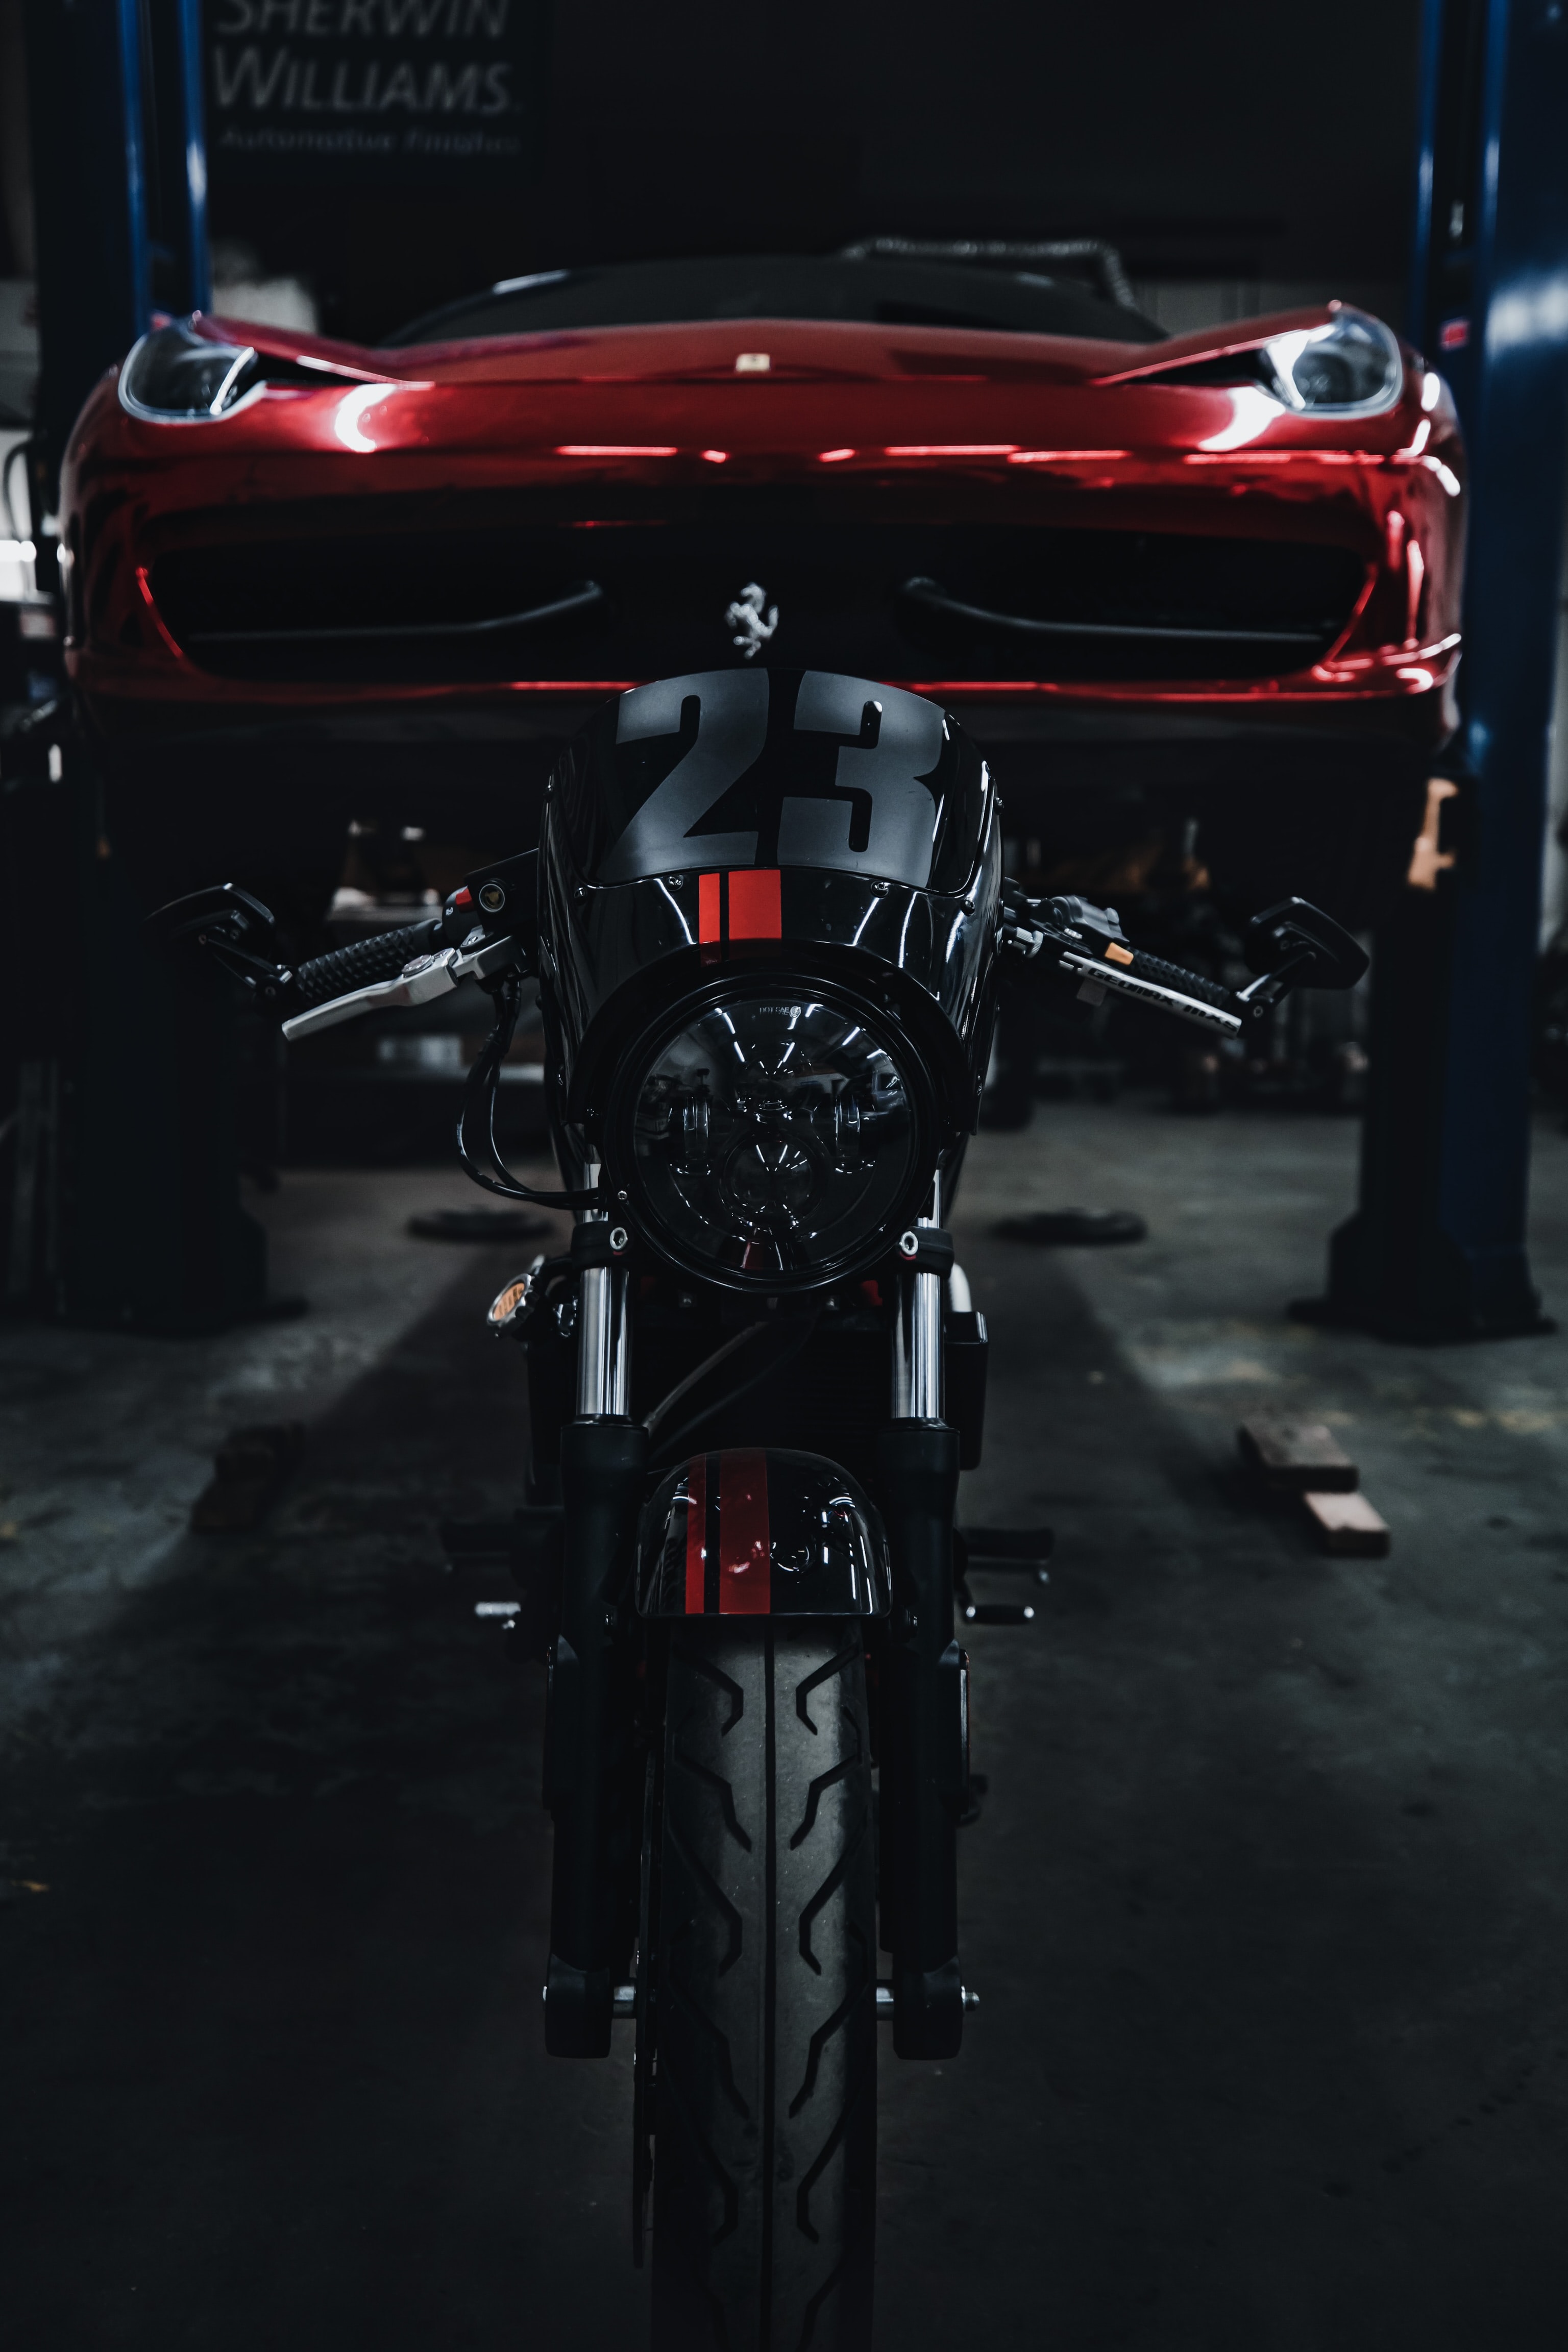 Horizontal Wallpaper bike, motorcycles, black, red, car, motorcycle